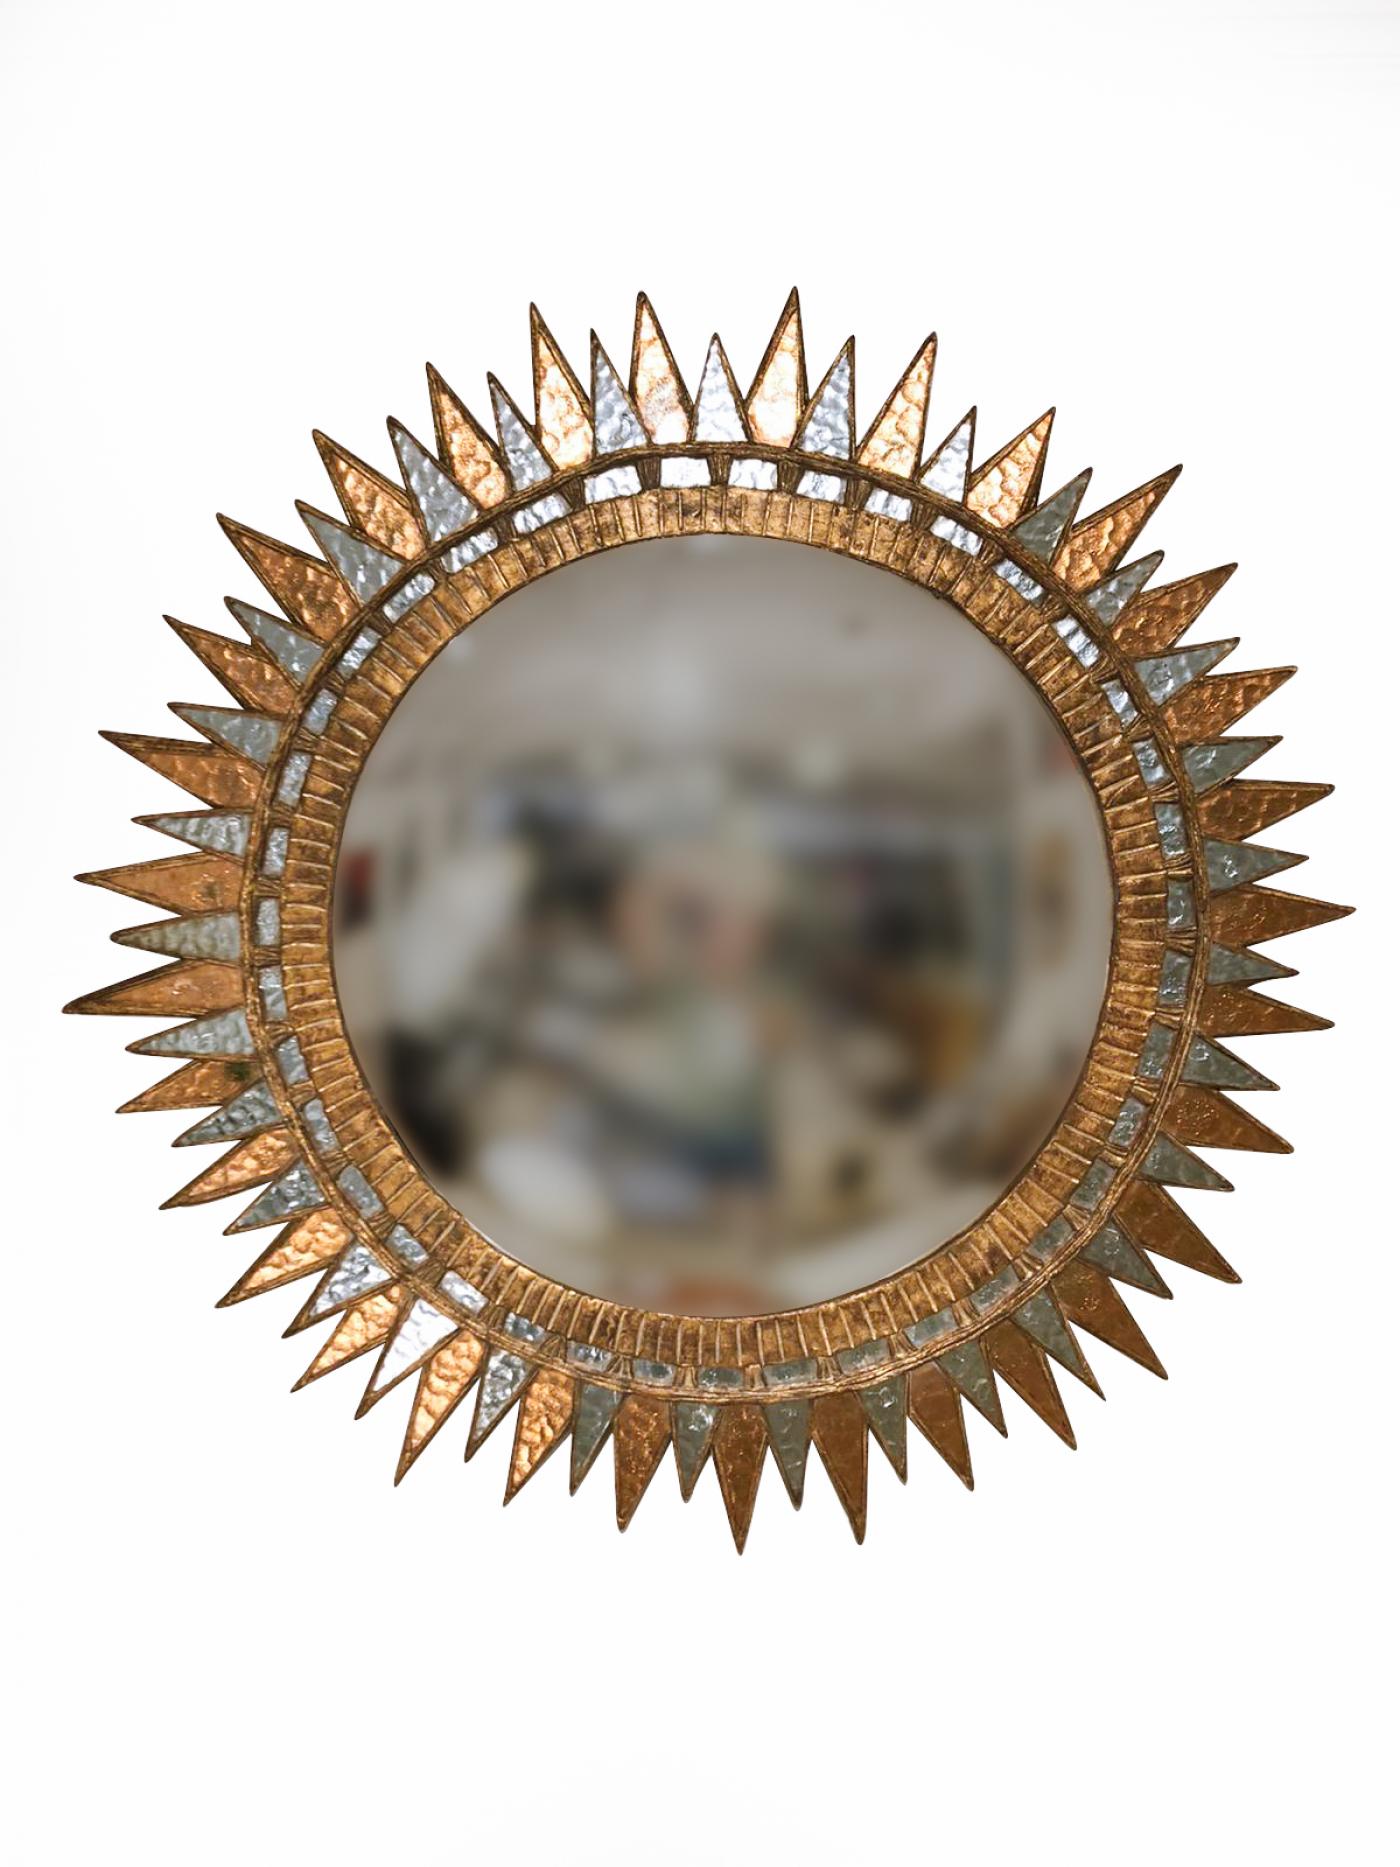 A Starburst form convex mirror in the manner of Line Vautrin